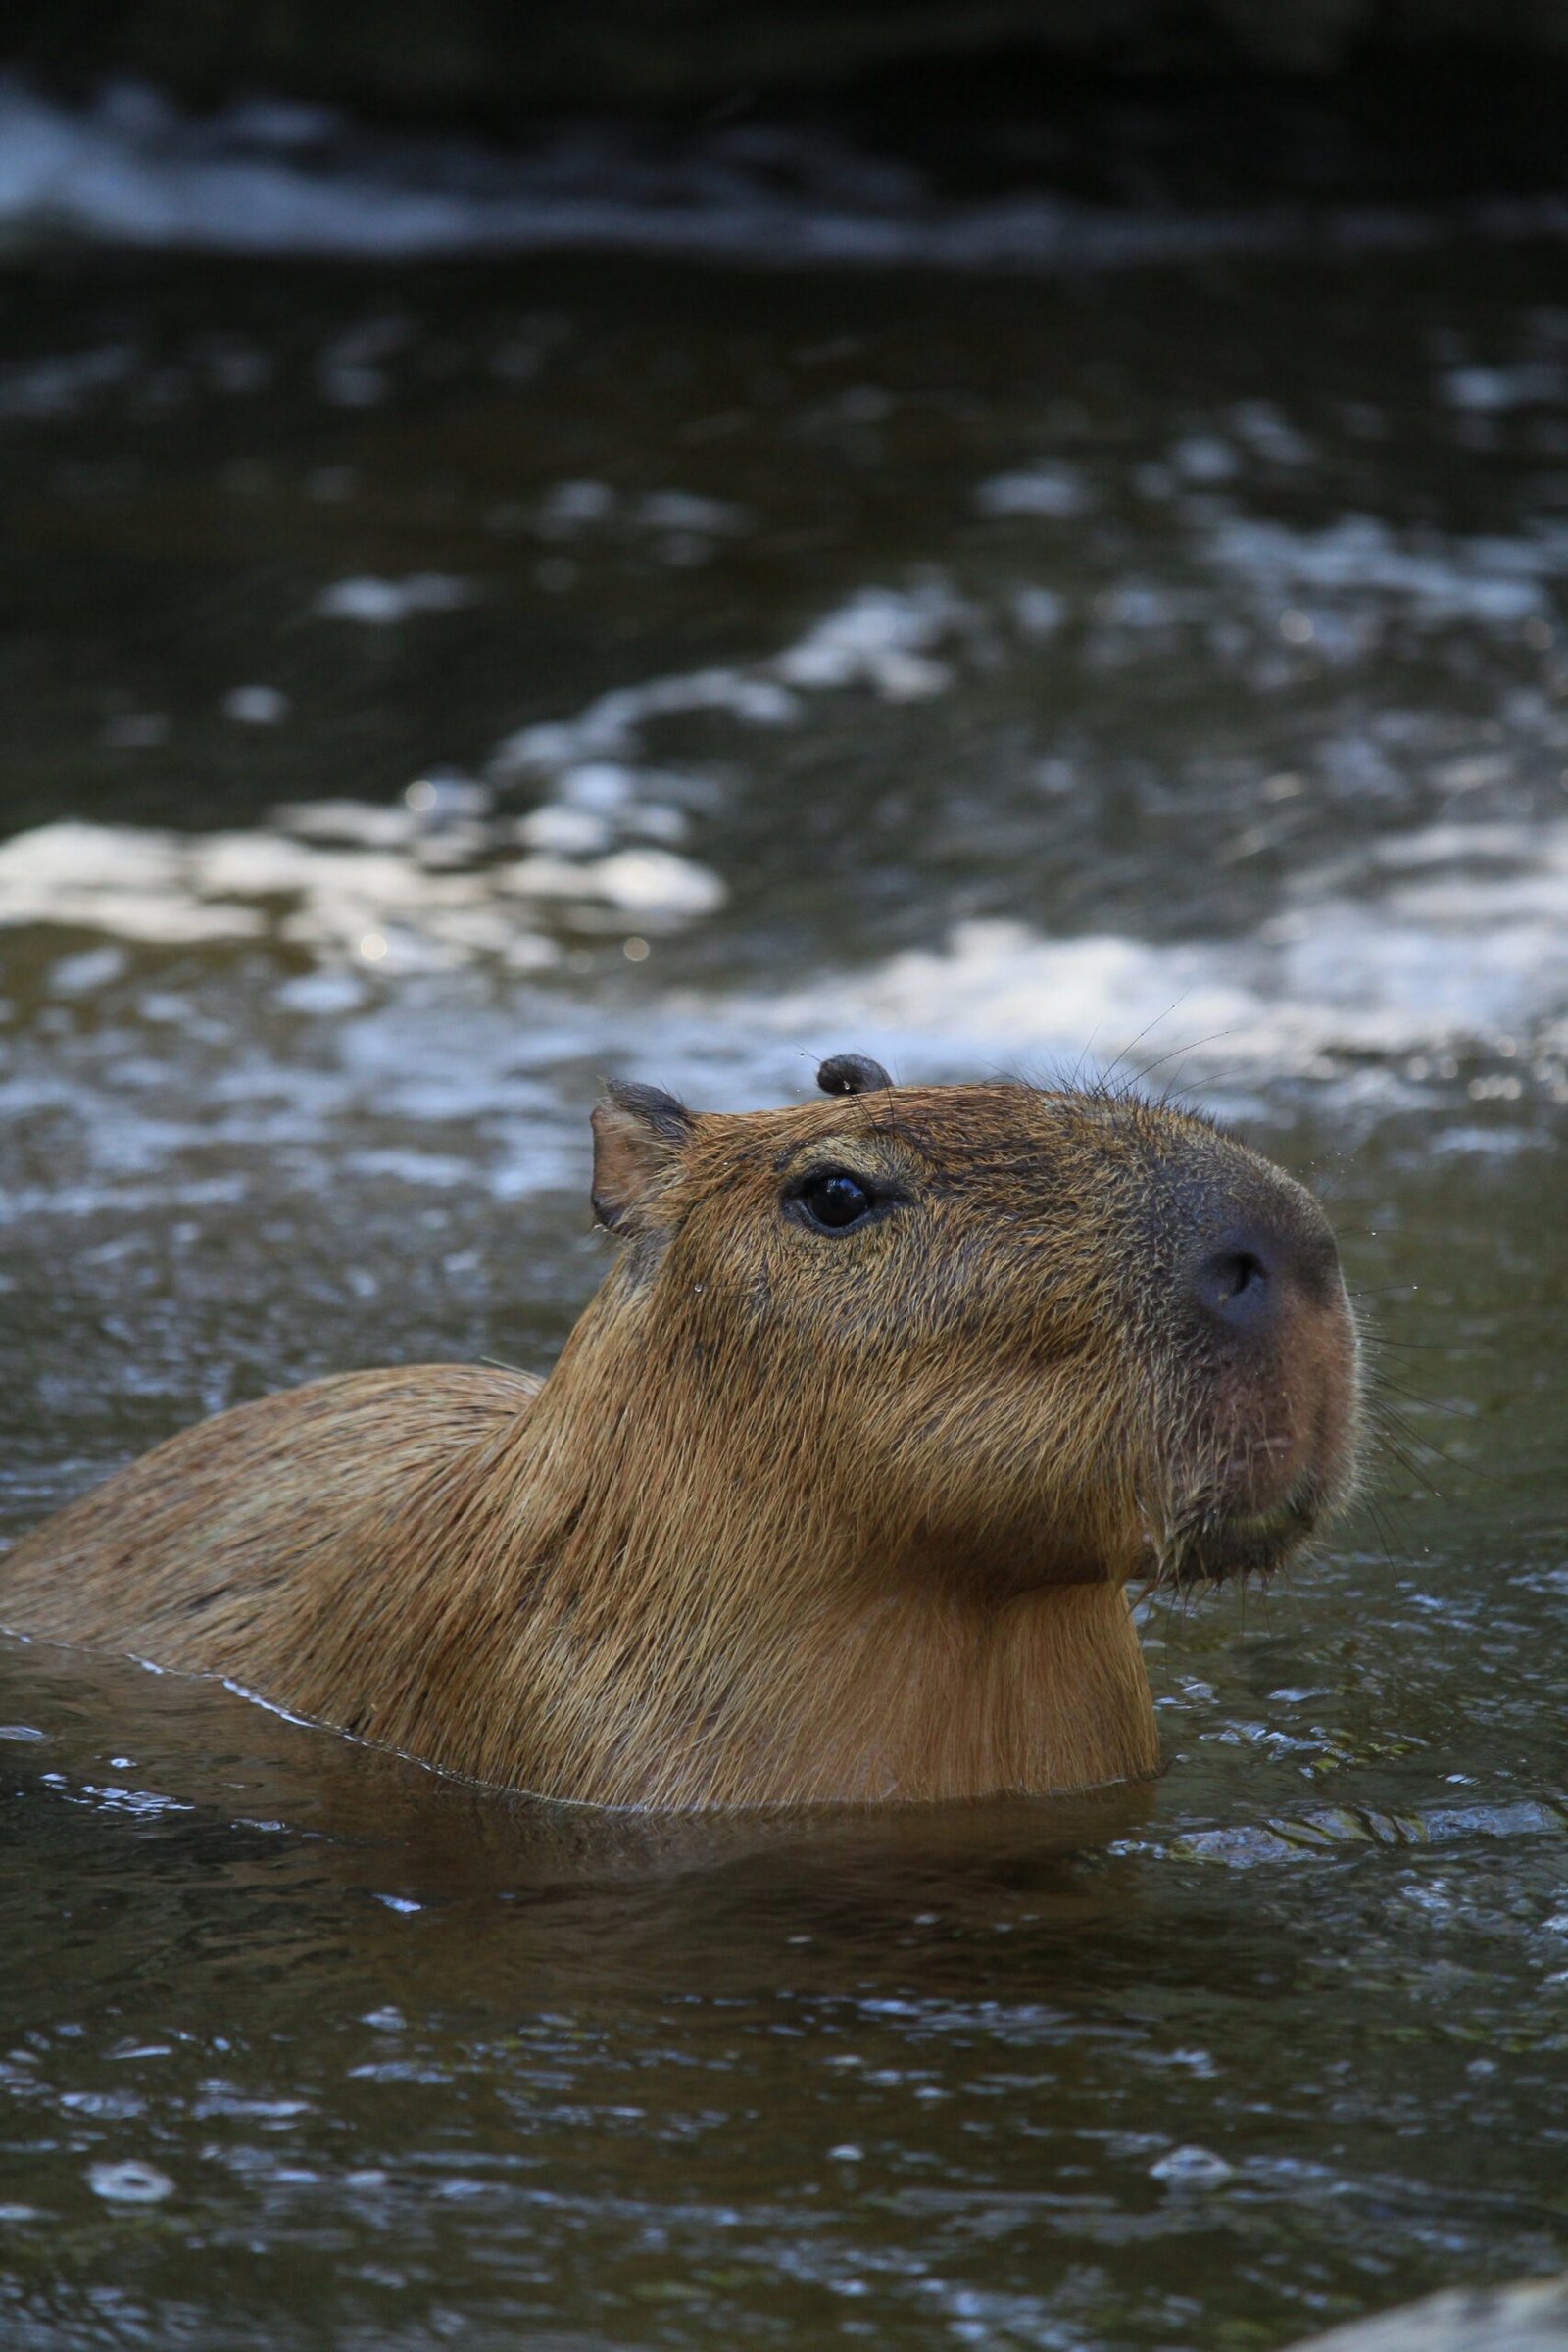 Are Capybaras Present in Edinburgh Zoo?